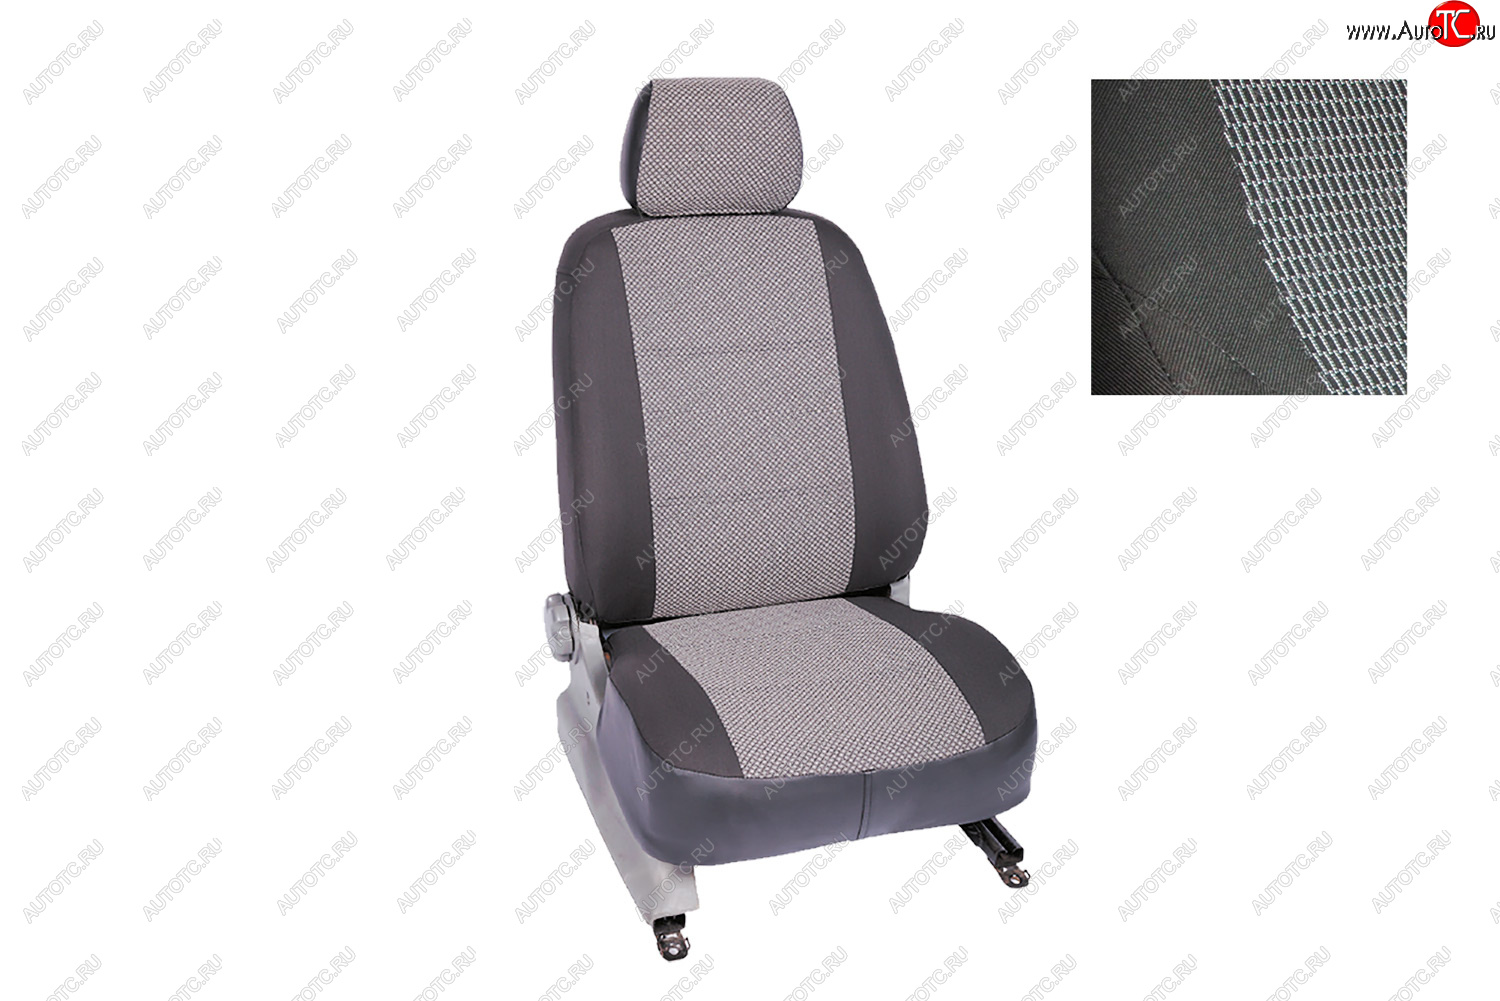 4 599 р. Чехлы для сидений на sedan 40/60 airbag Seintex (жаккард)  Datsun on-DO  дорестайлинг (2014-2019)  с доставкой в г. Калуга